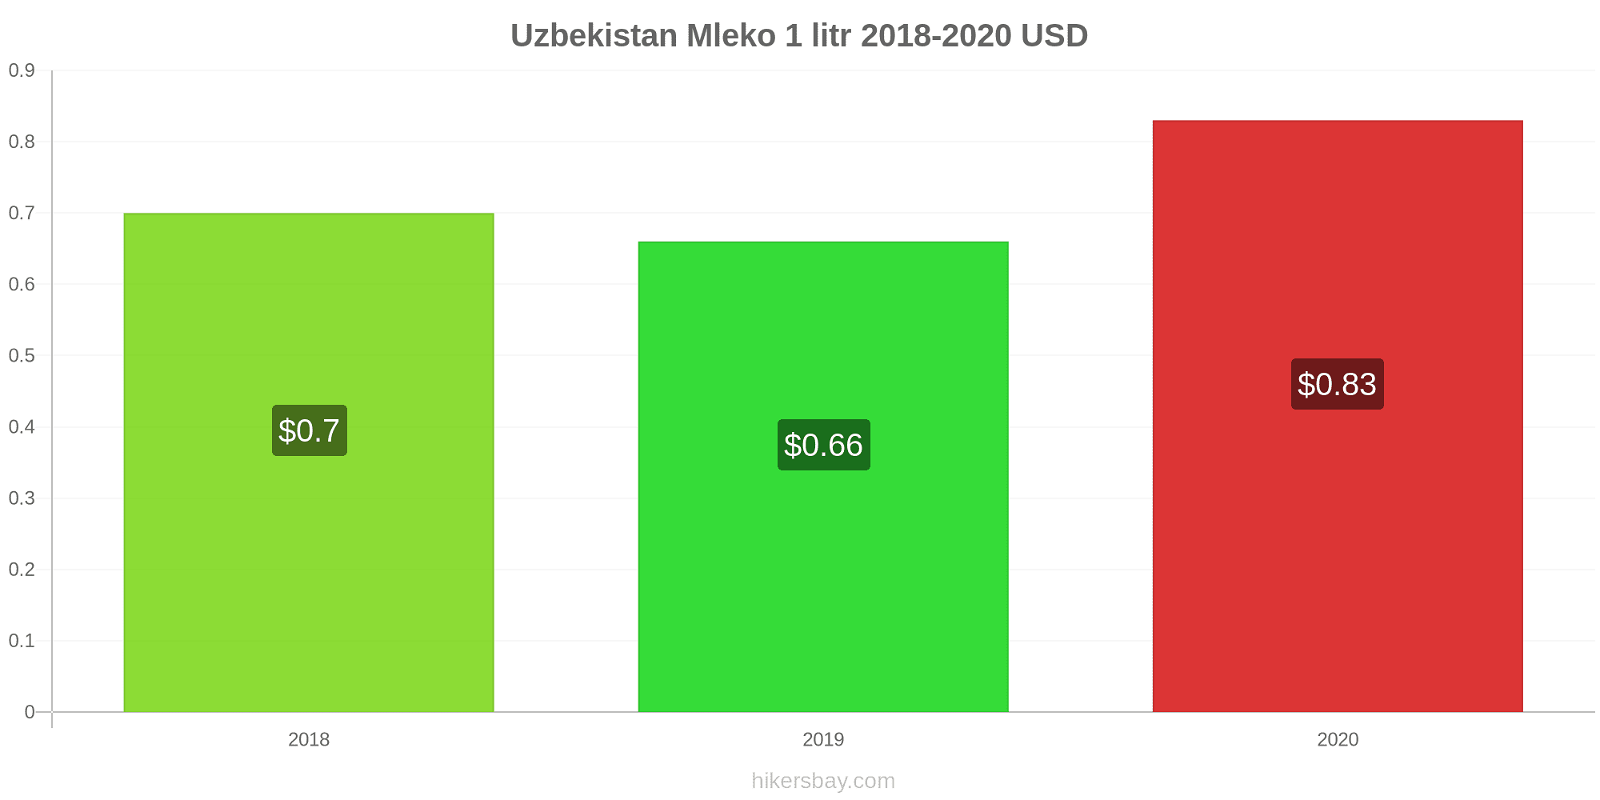 Uzbekistan zmiany cen Mleko (1 litr) hikersbay.com